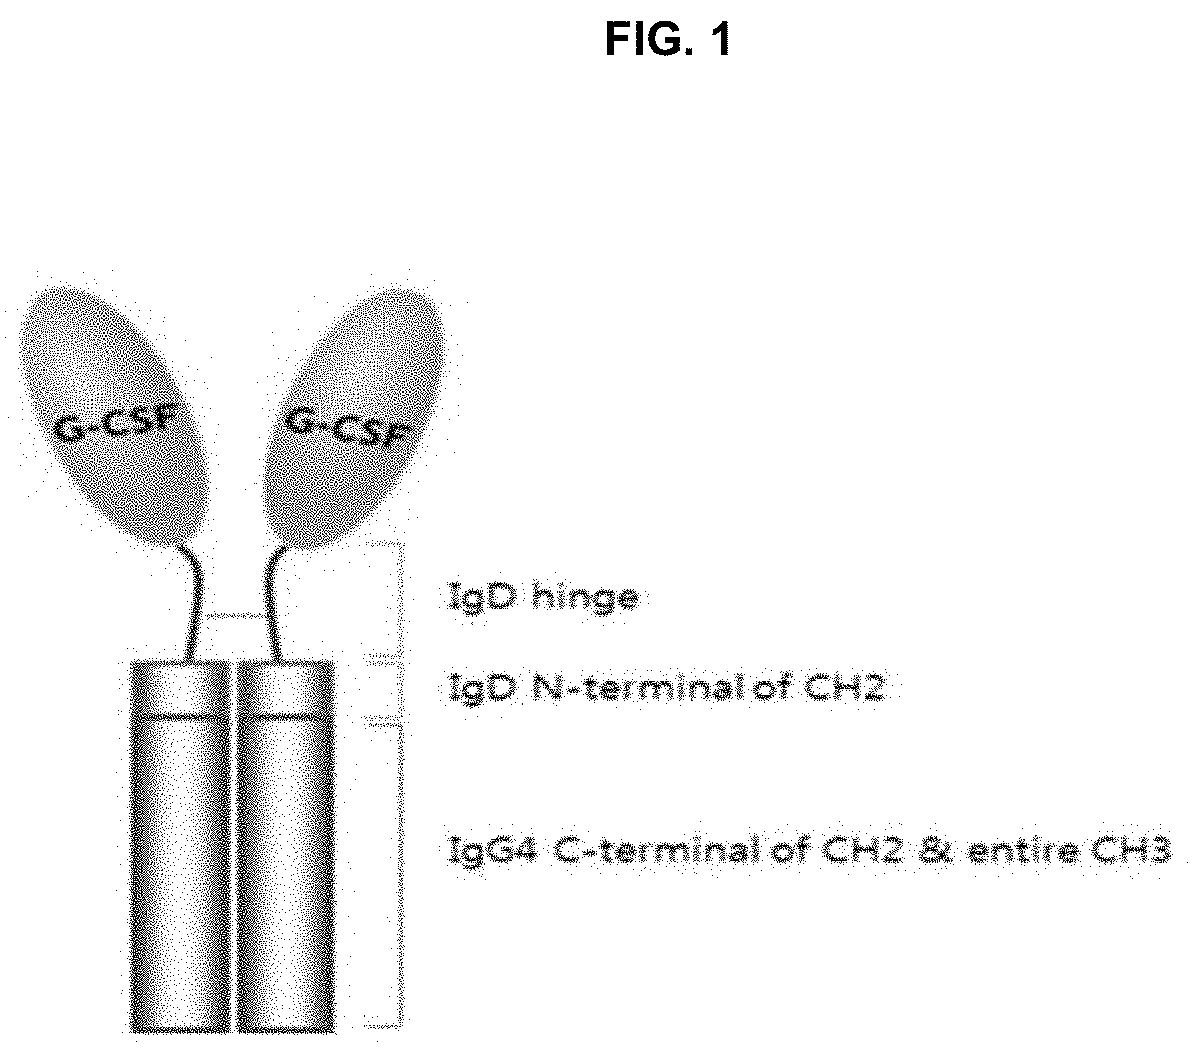 Long-acting g-csf for preventing neutropenia or reducing duration of neutropenia